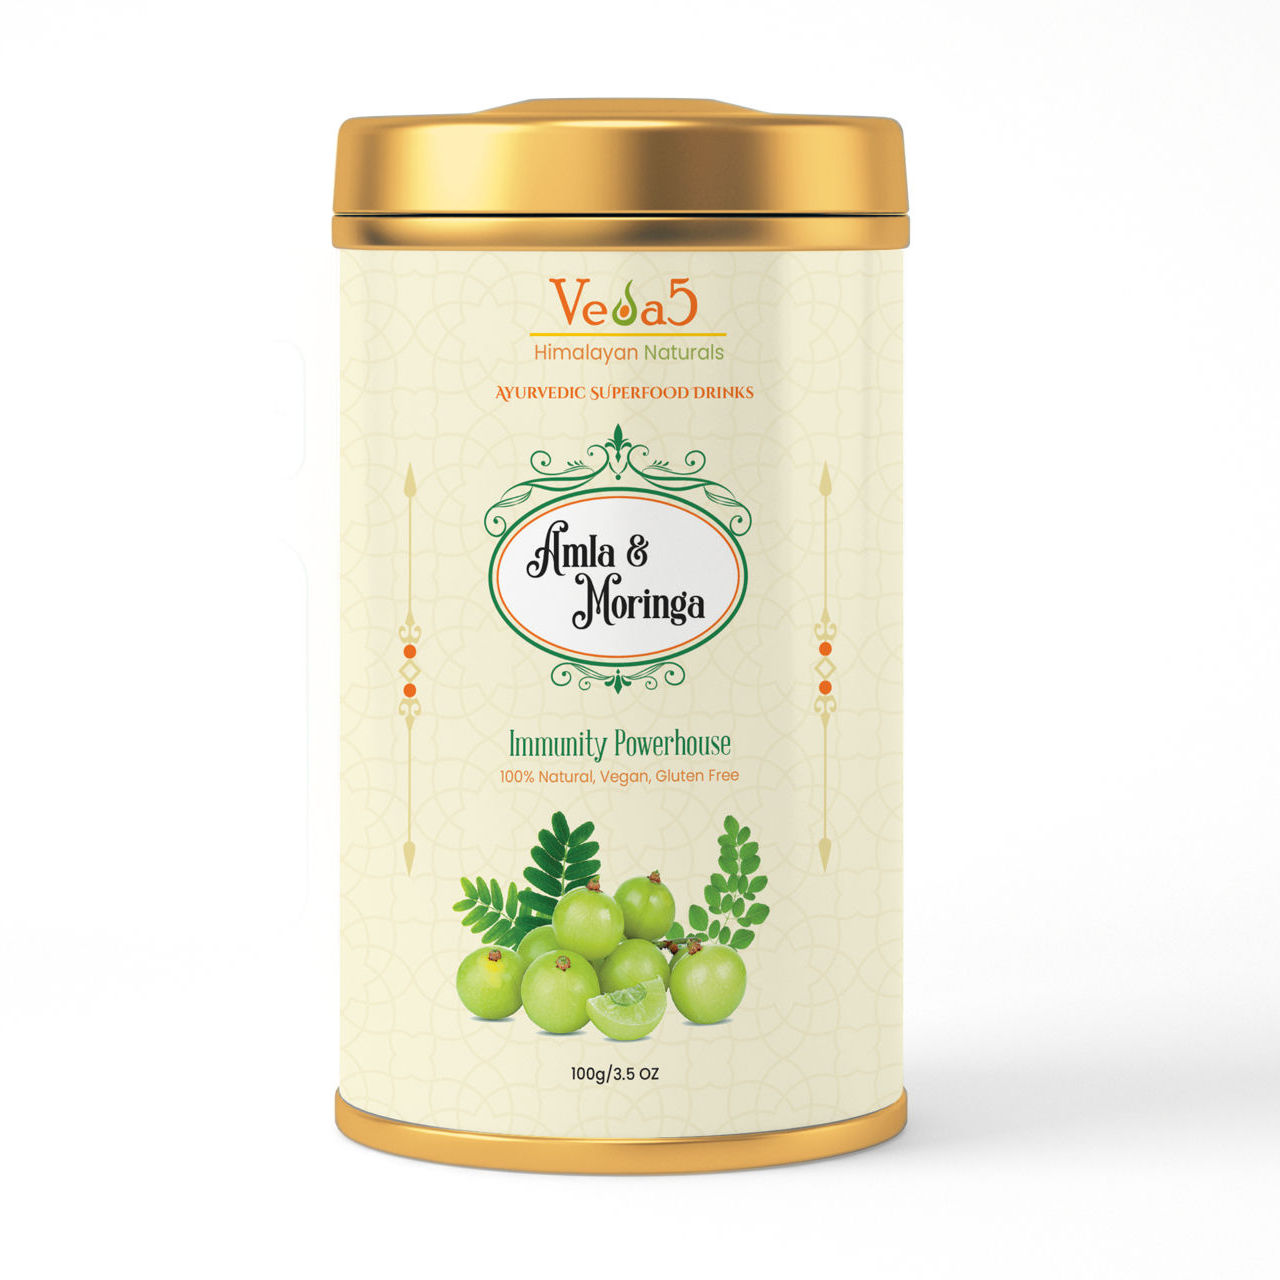 Amla and Moringa Ayurvedic Superfood Drink Immunity Powerhouse Veda5 Himalayan Naturals